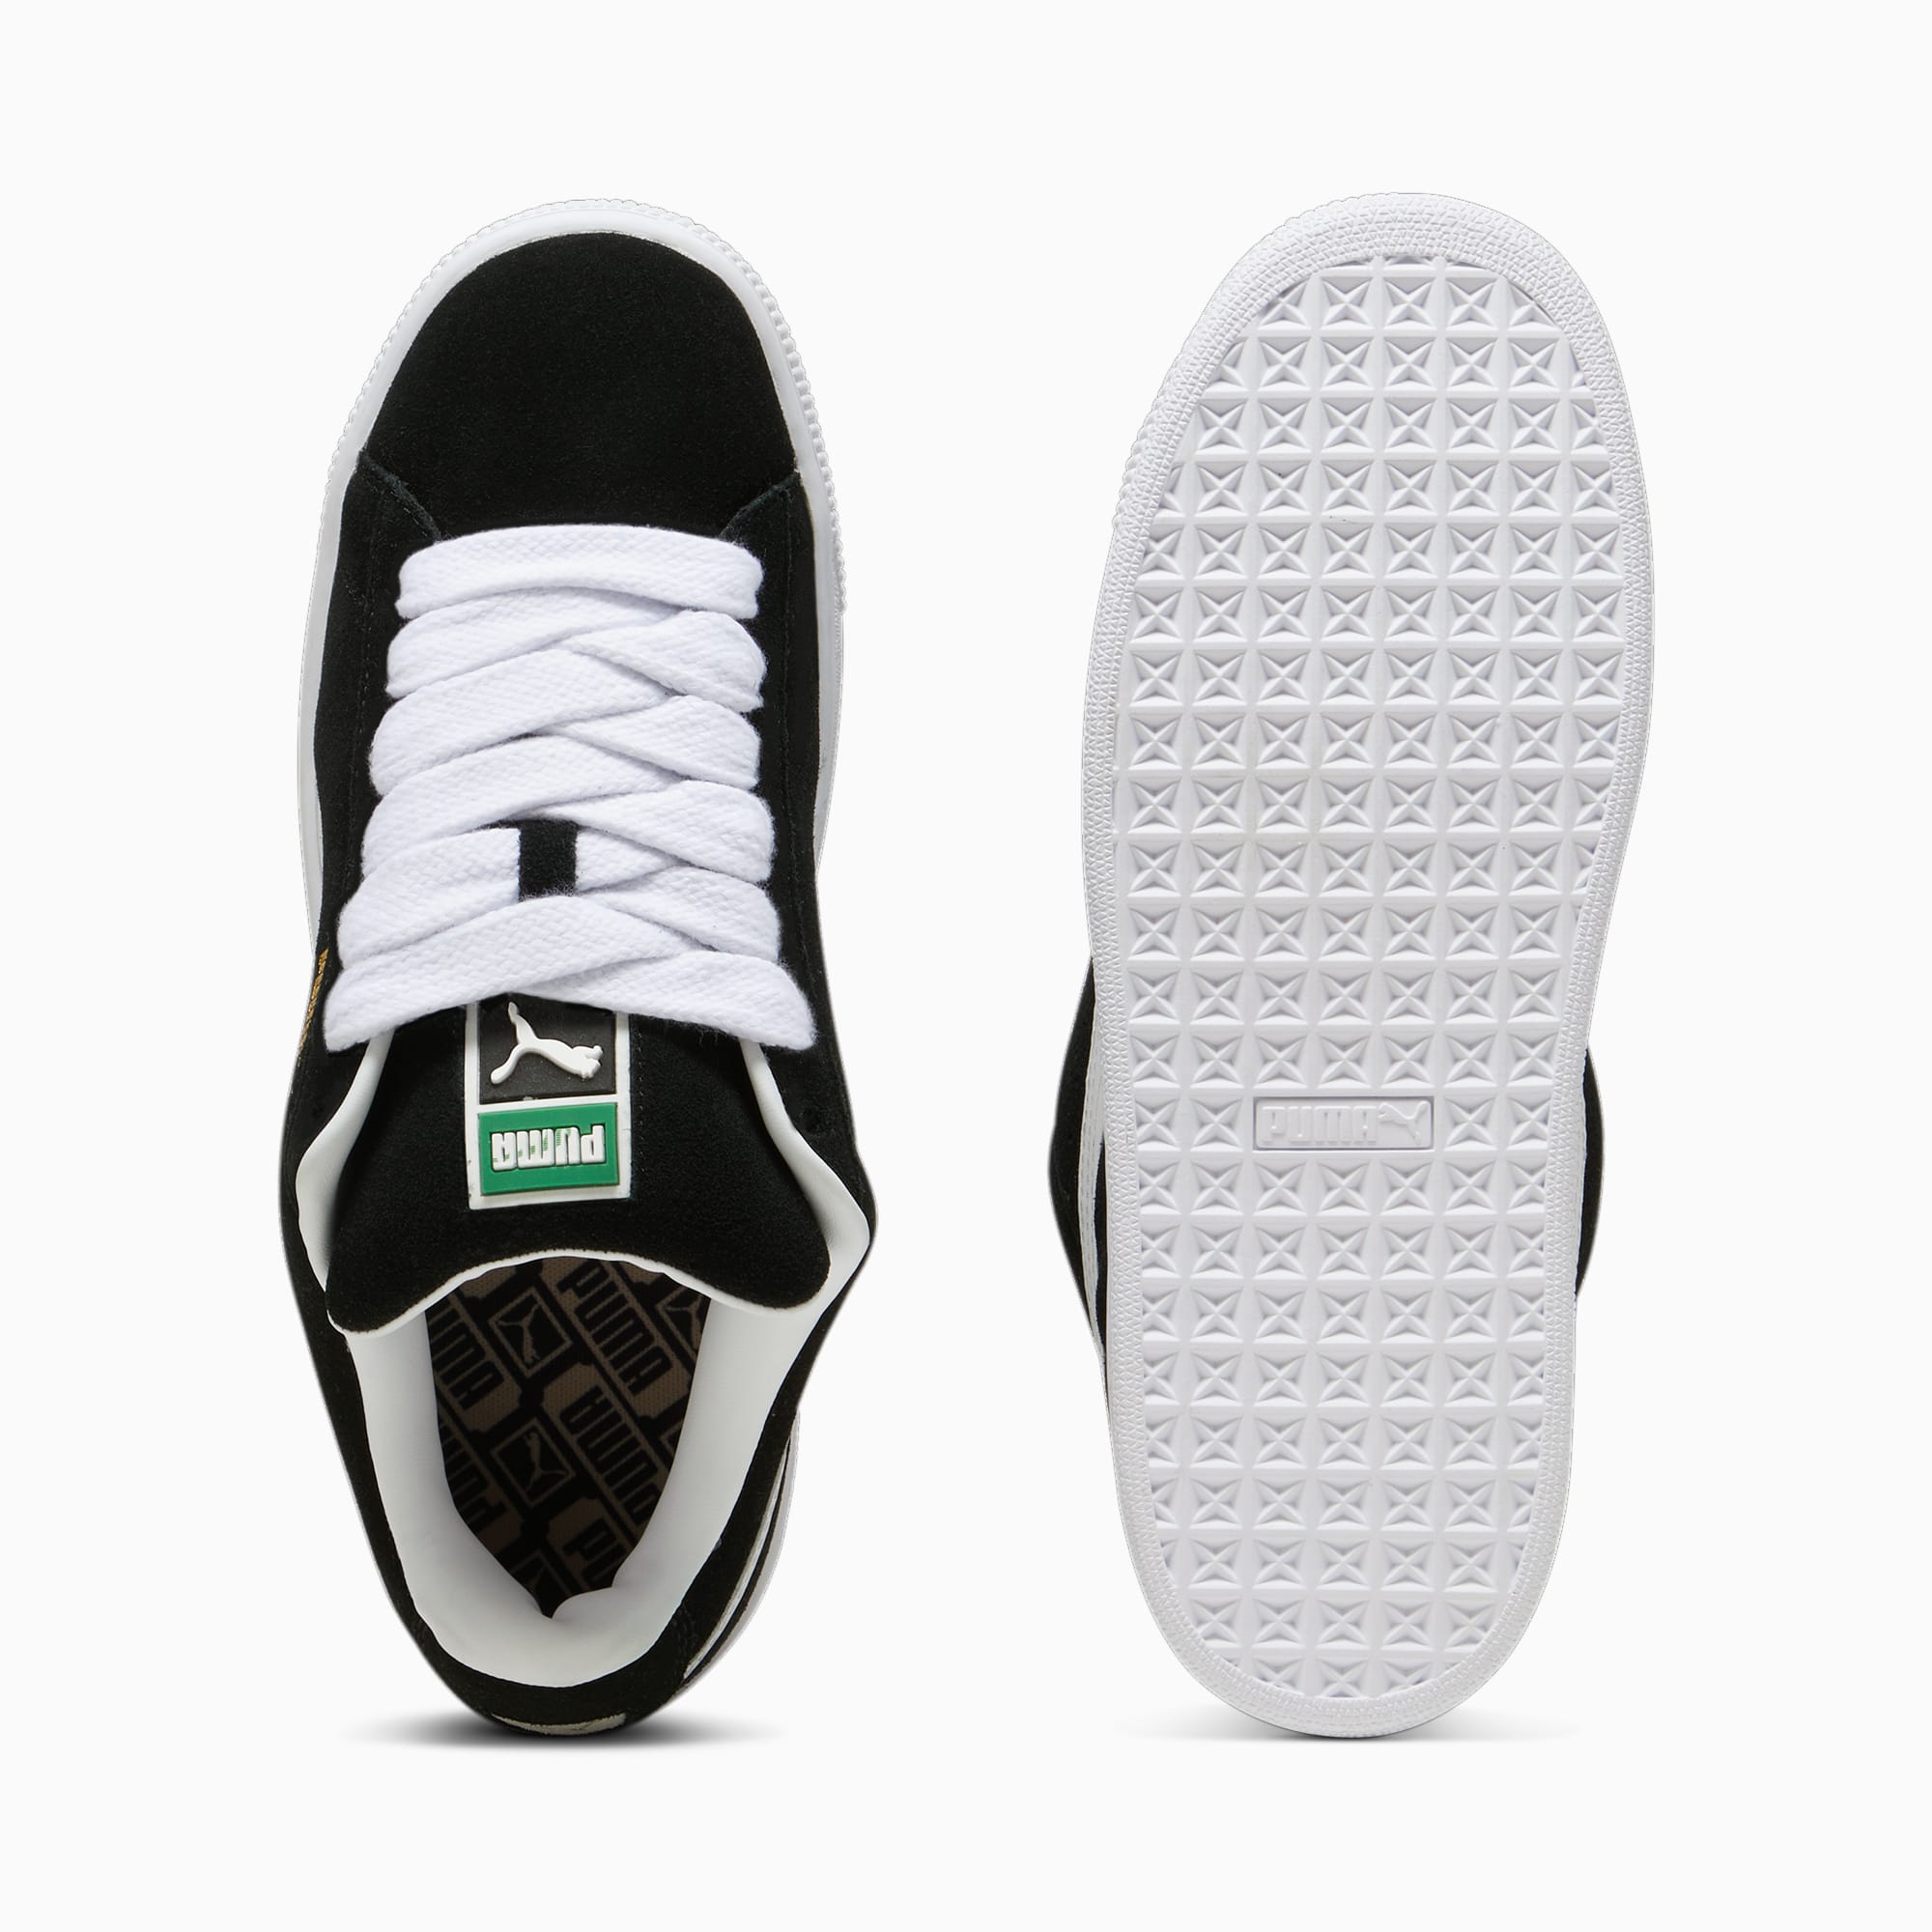 PUMA Suede Xl Sneakers Unisex, Black/White